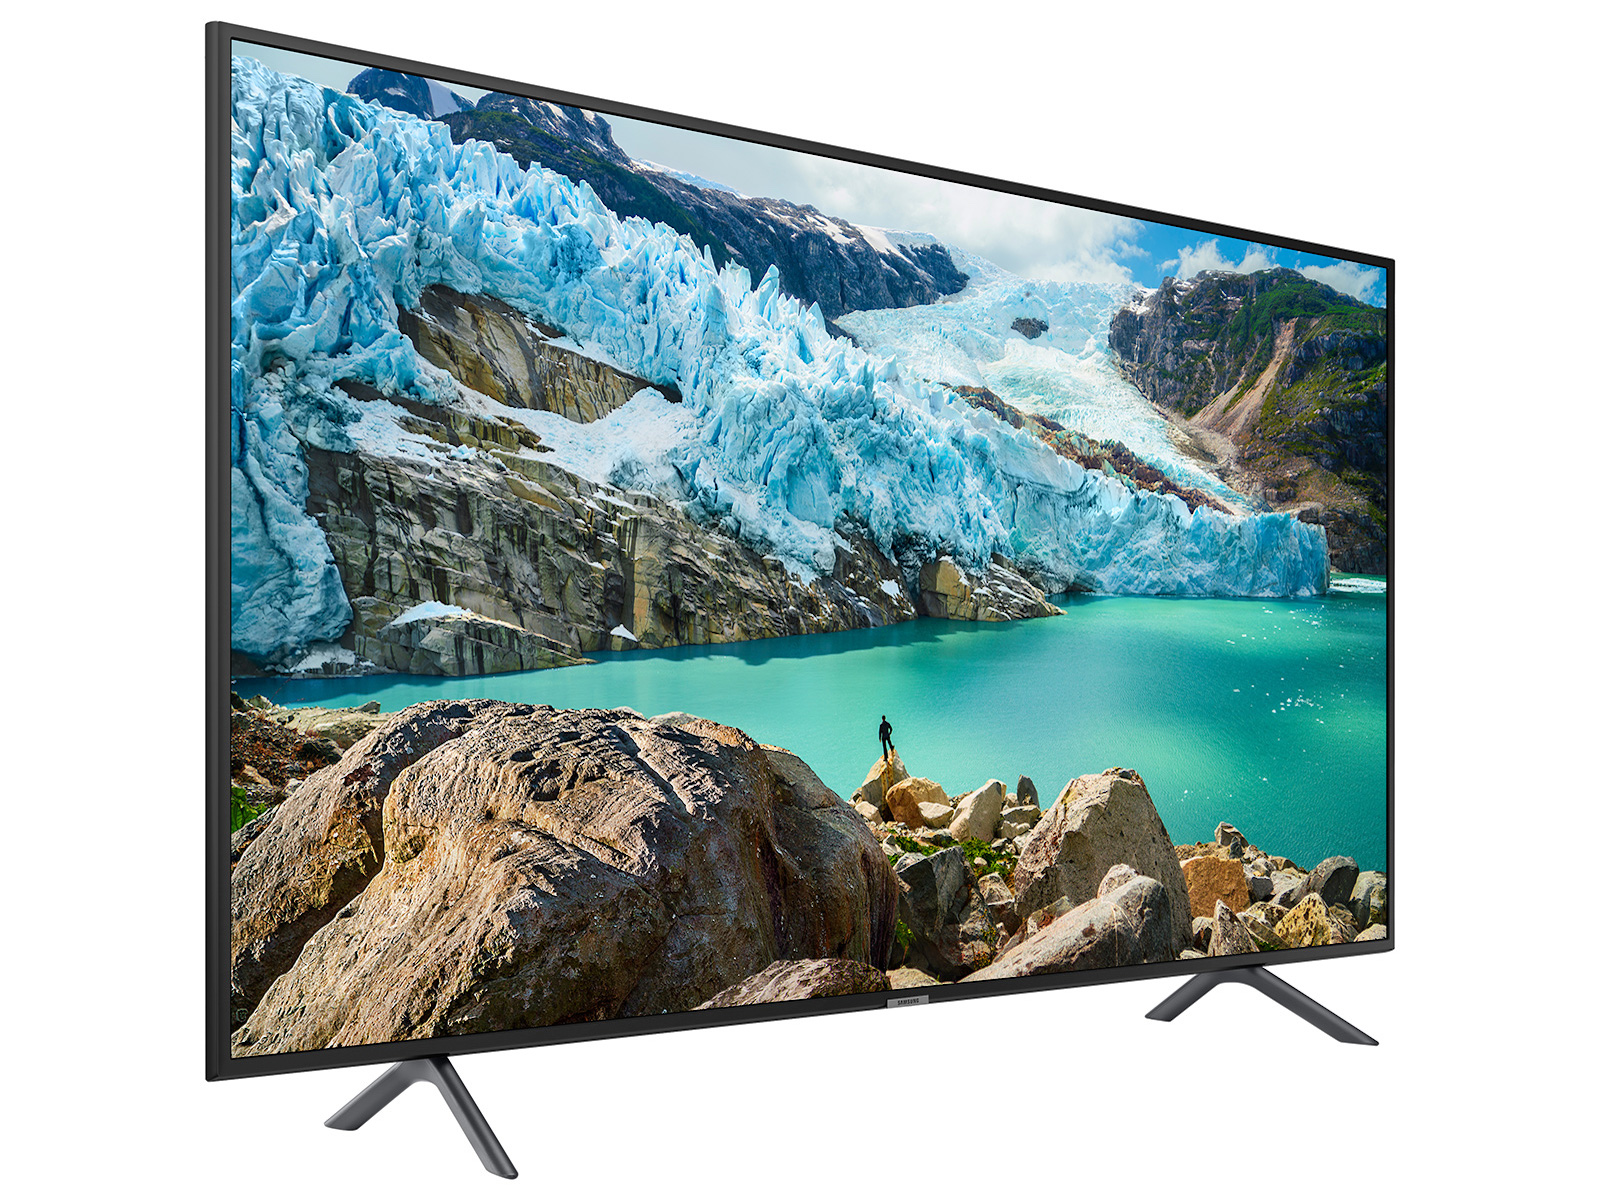 UHD 4K Smart TV RU7100 55 - Specs & Price